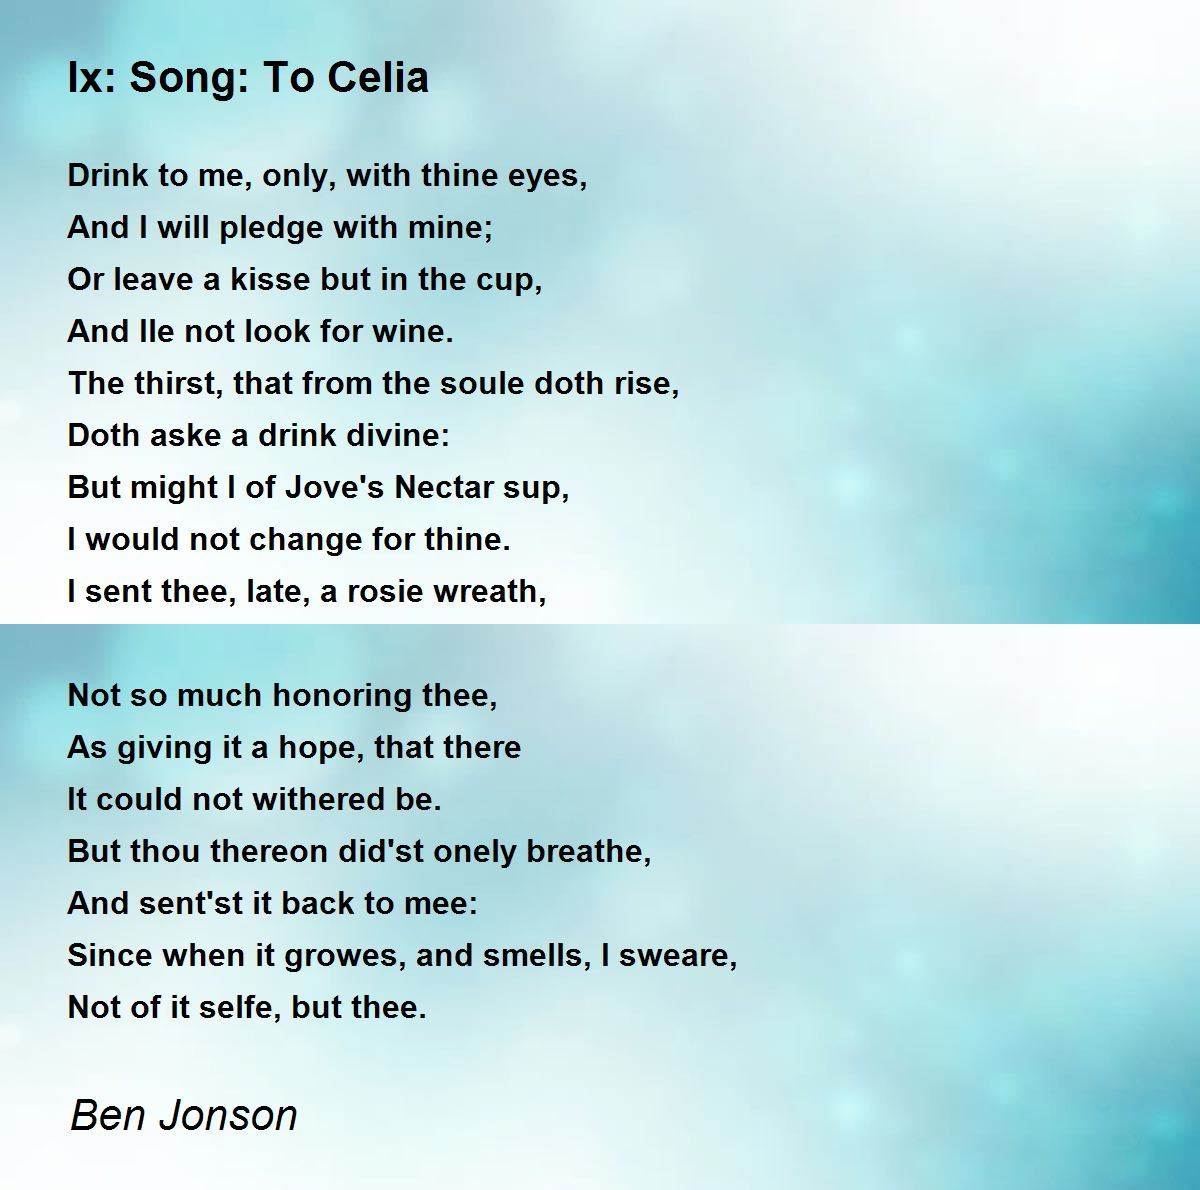 Песни 9 б. Ben Jonson "Plays and poems". Celia poem by b en Johnson.